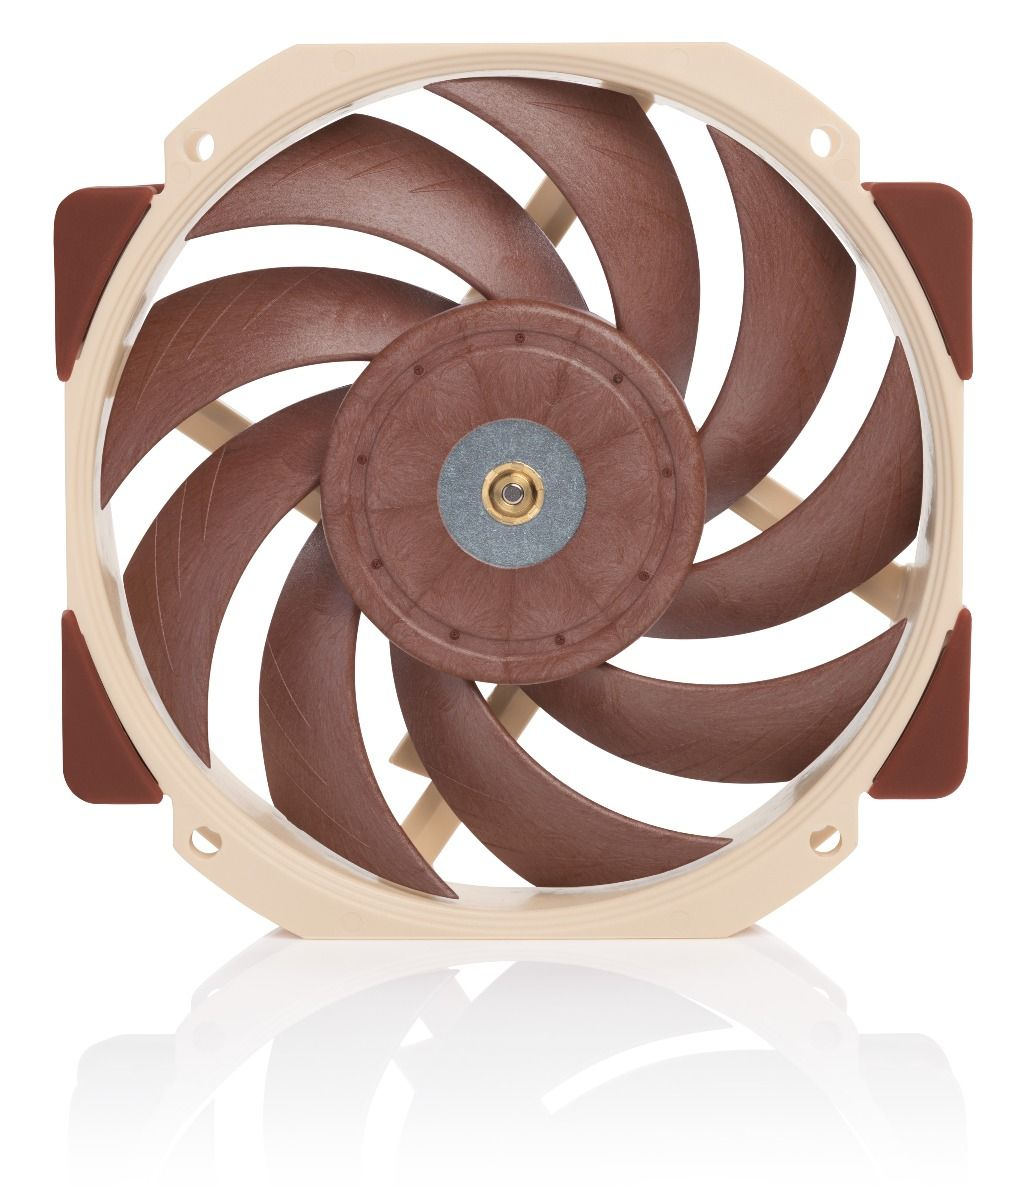 Noctua NF-S12A PWM 120mm Cooling Fan (Brown)